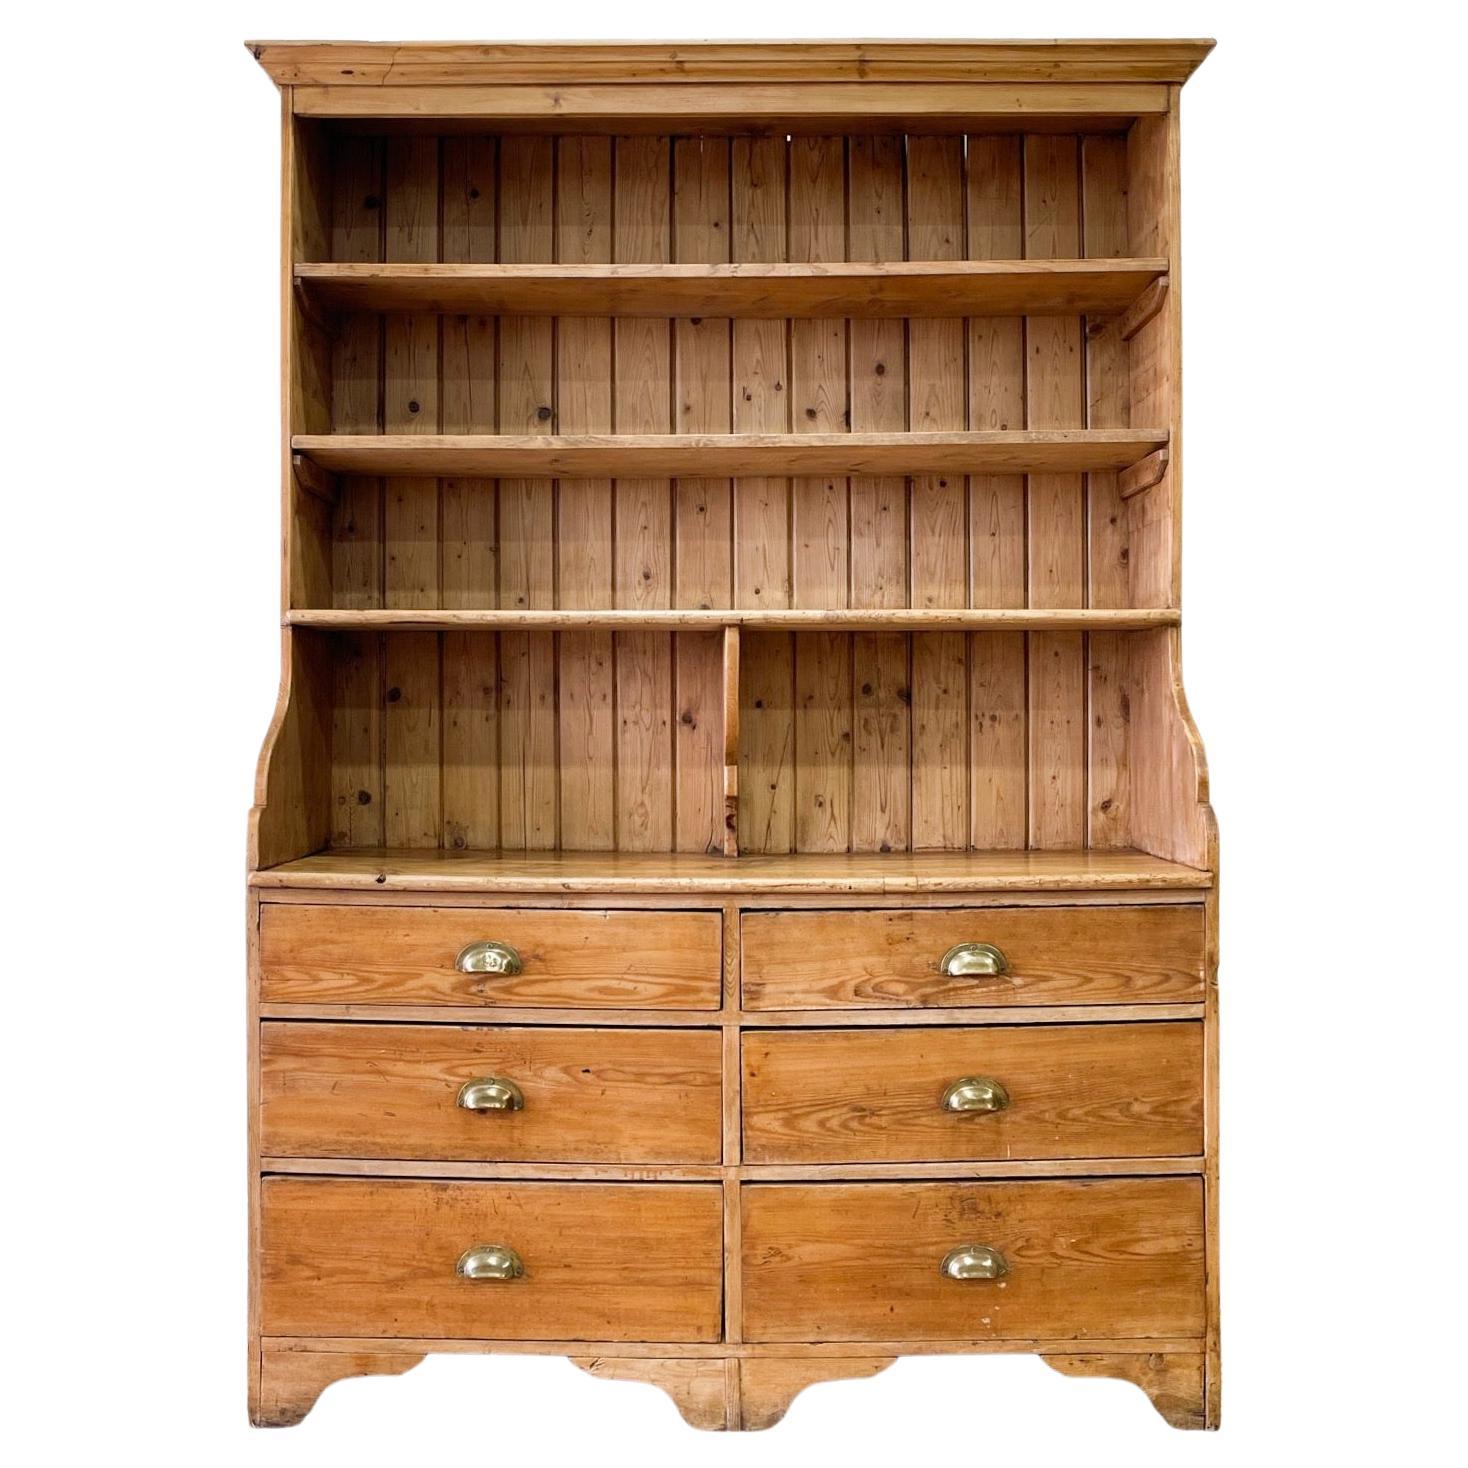 A 19th Century English Pine Bookcase Cupboard or Hutch